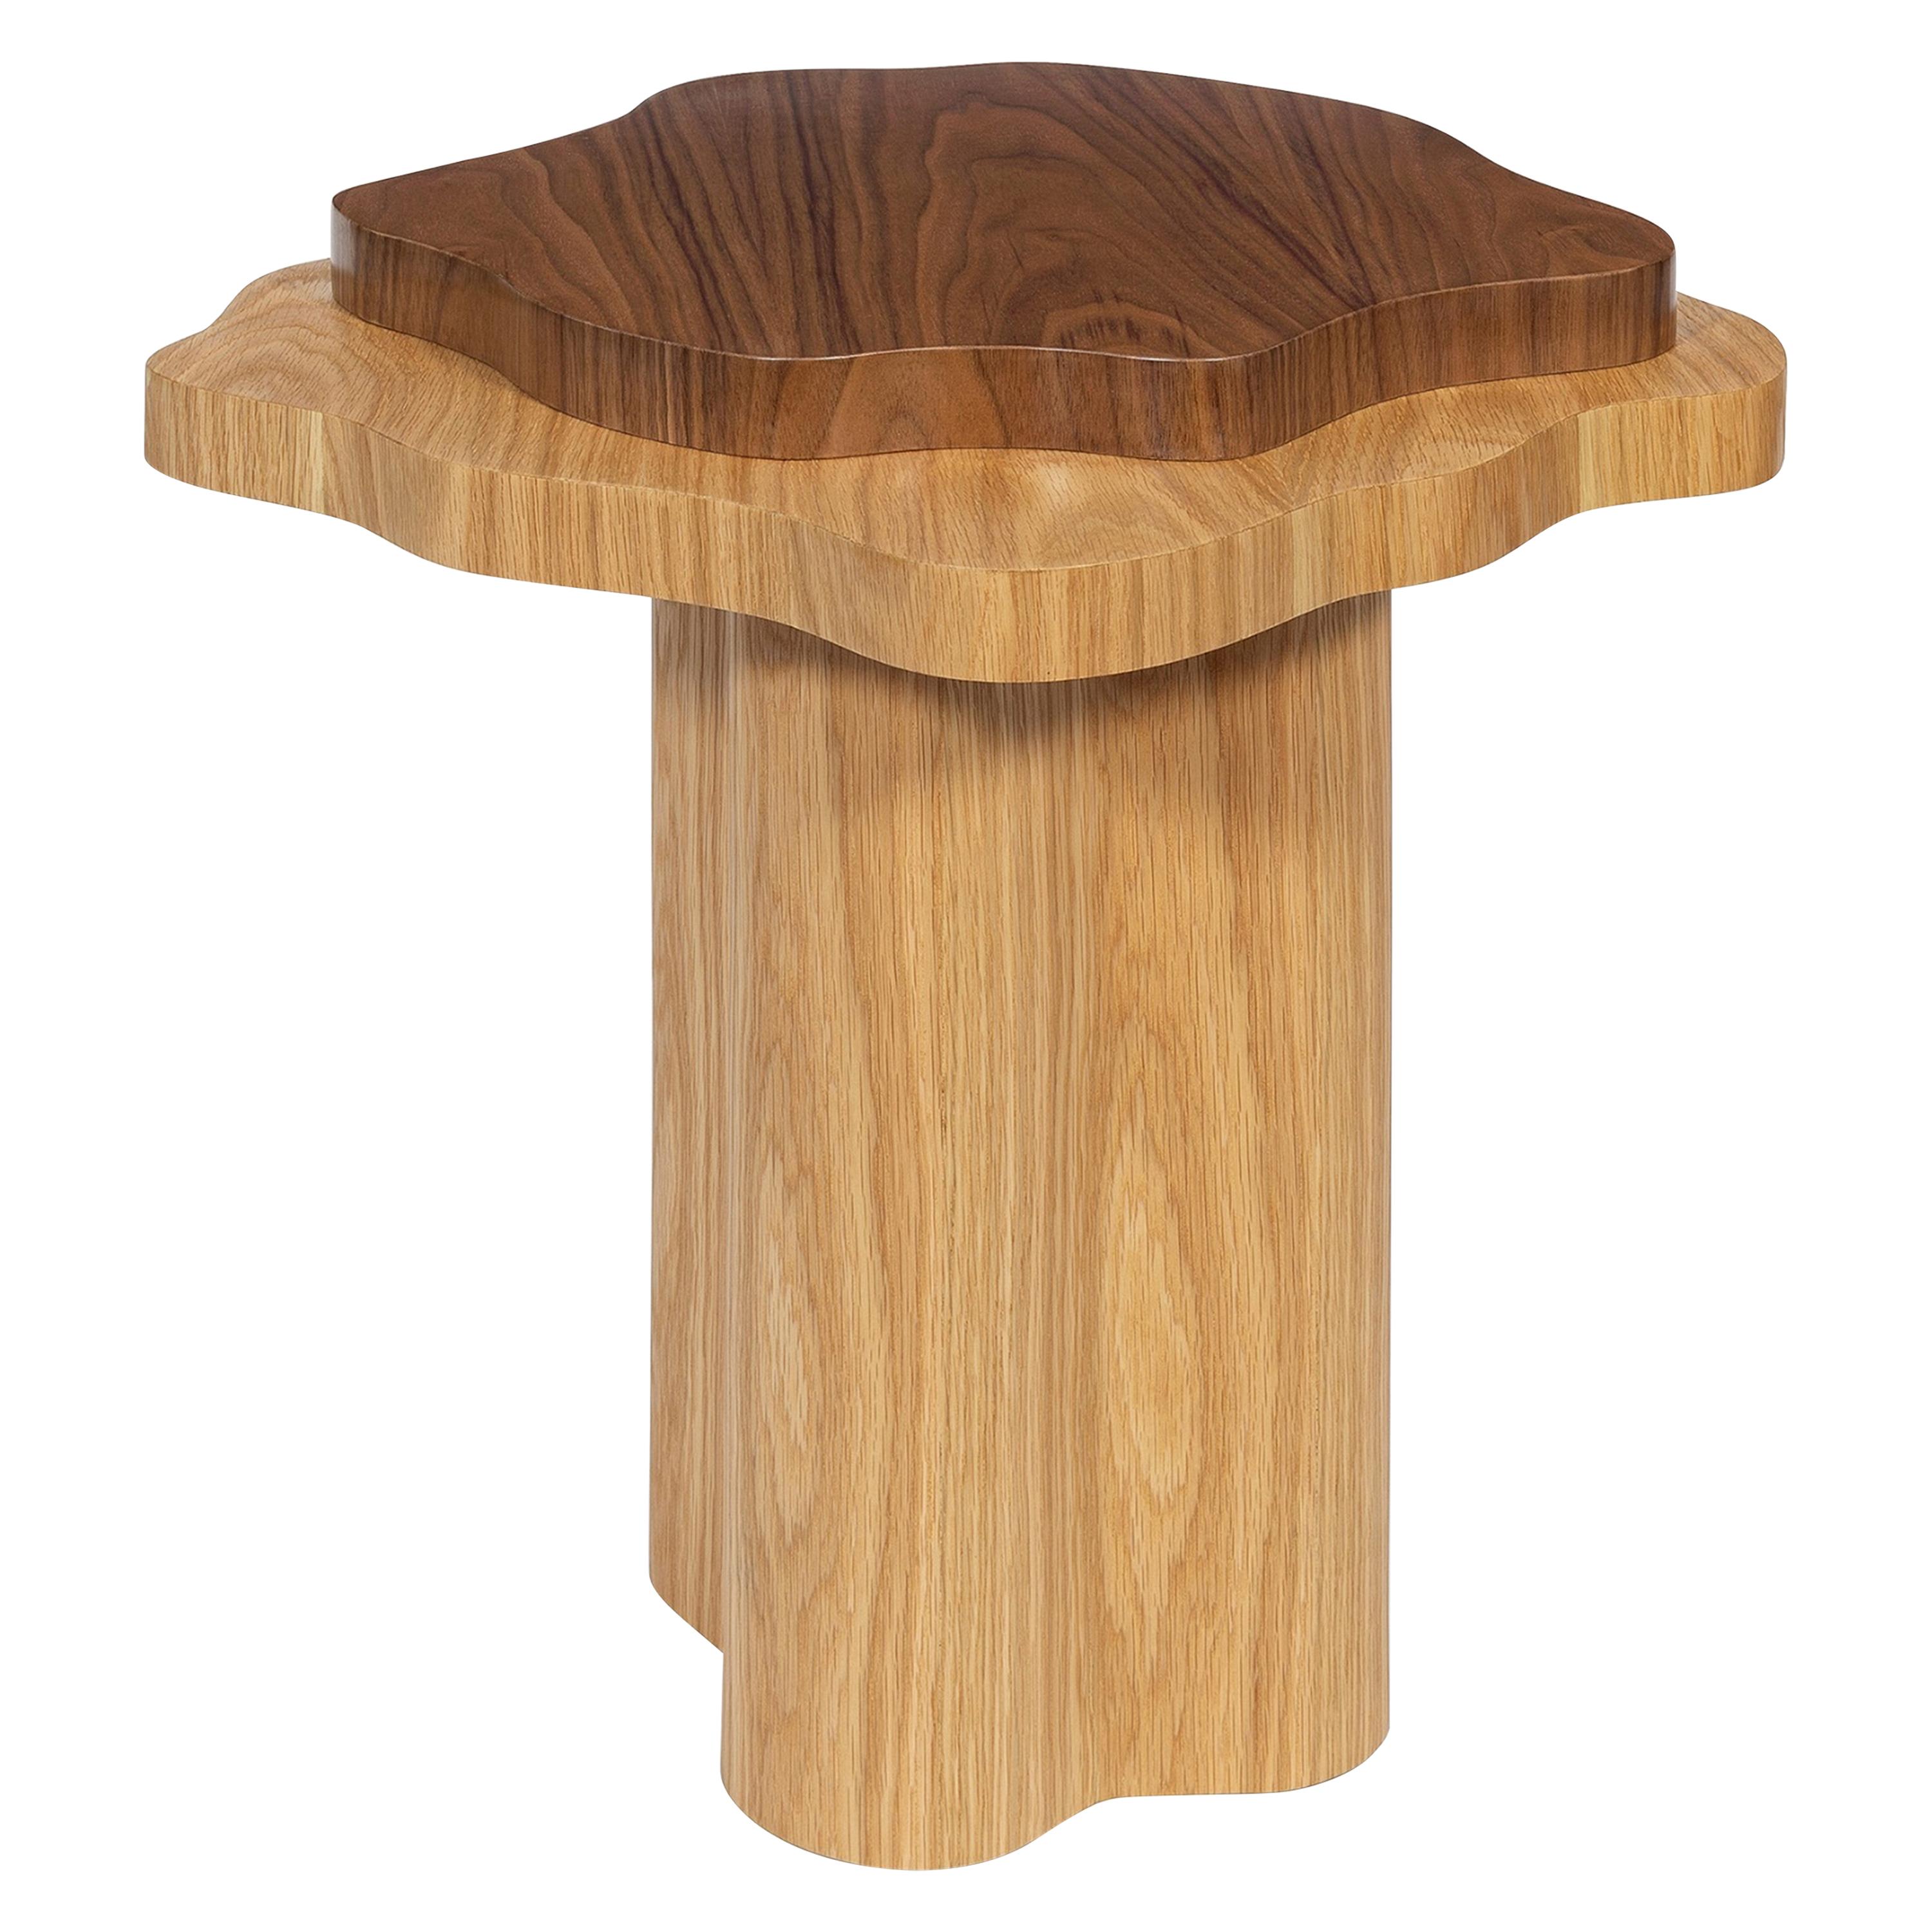 Arizona Side Table, Walnut and Oak, InsidherLand by Joana Santos Barbosa For Sale